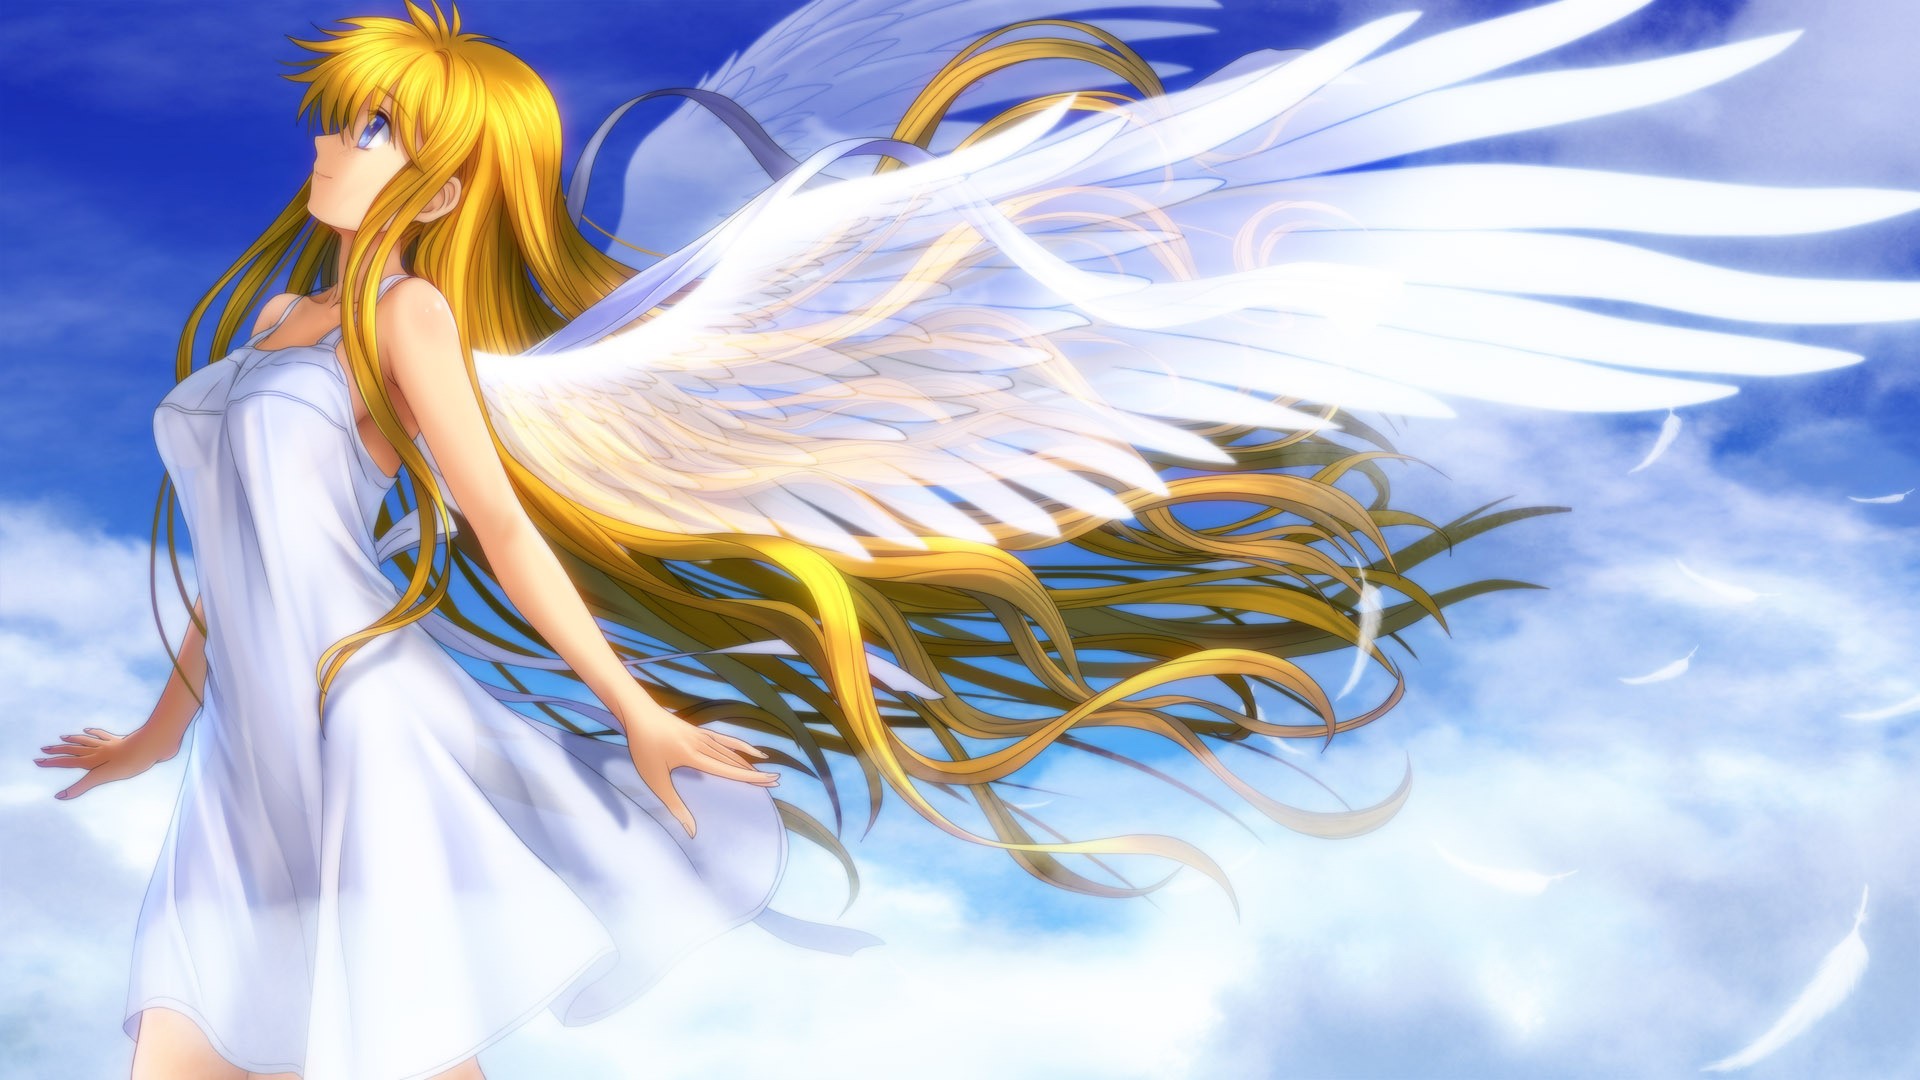 Anime 1920x1080 anime anime girls air Air (anime) blue eyes wings sky long hair blonde fantasy art fantasy girl